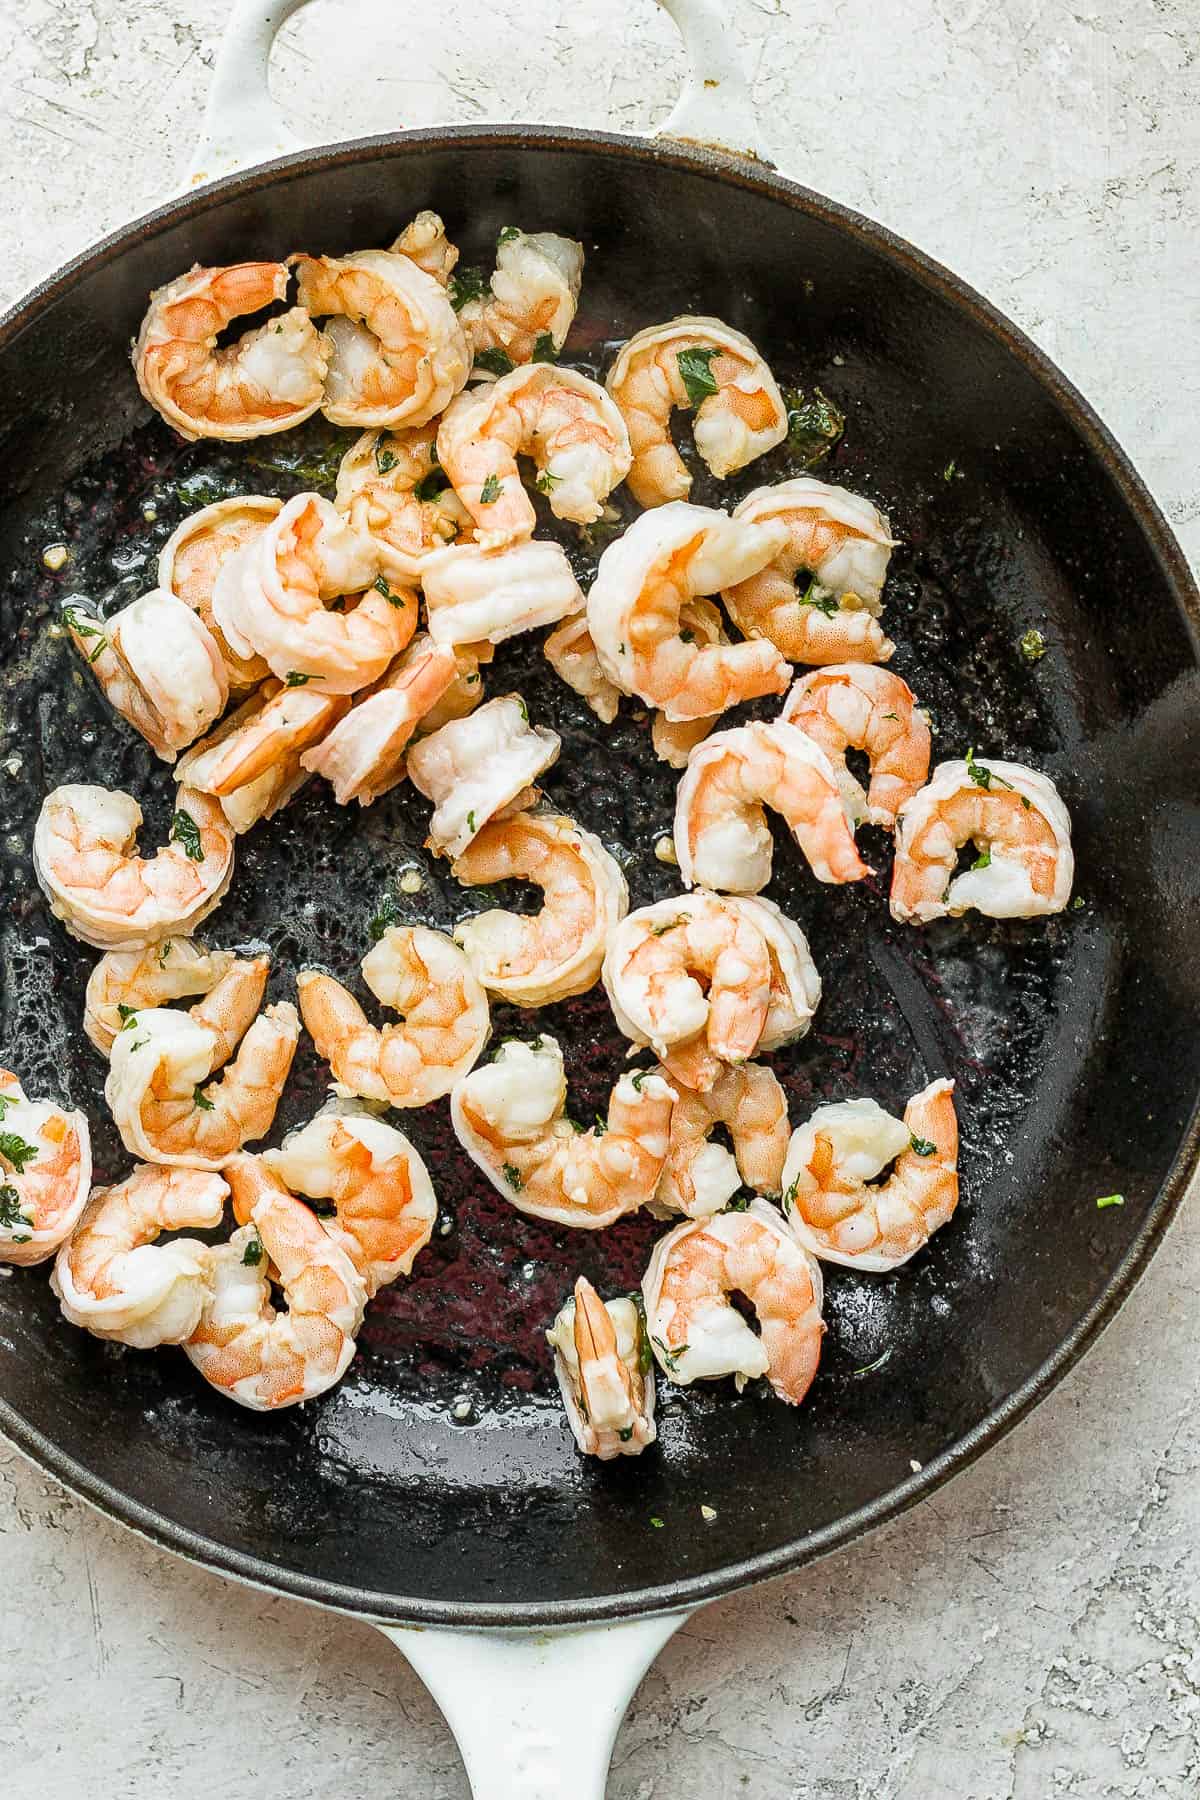 Shrimp being pan-fried.